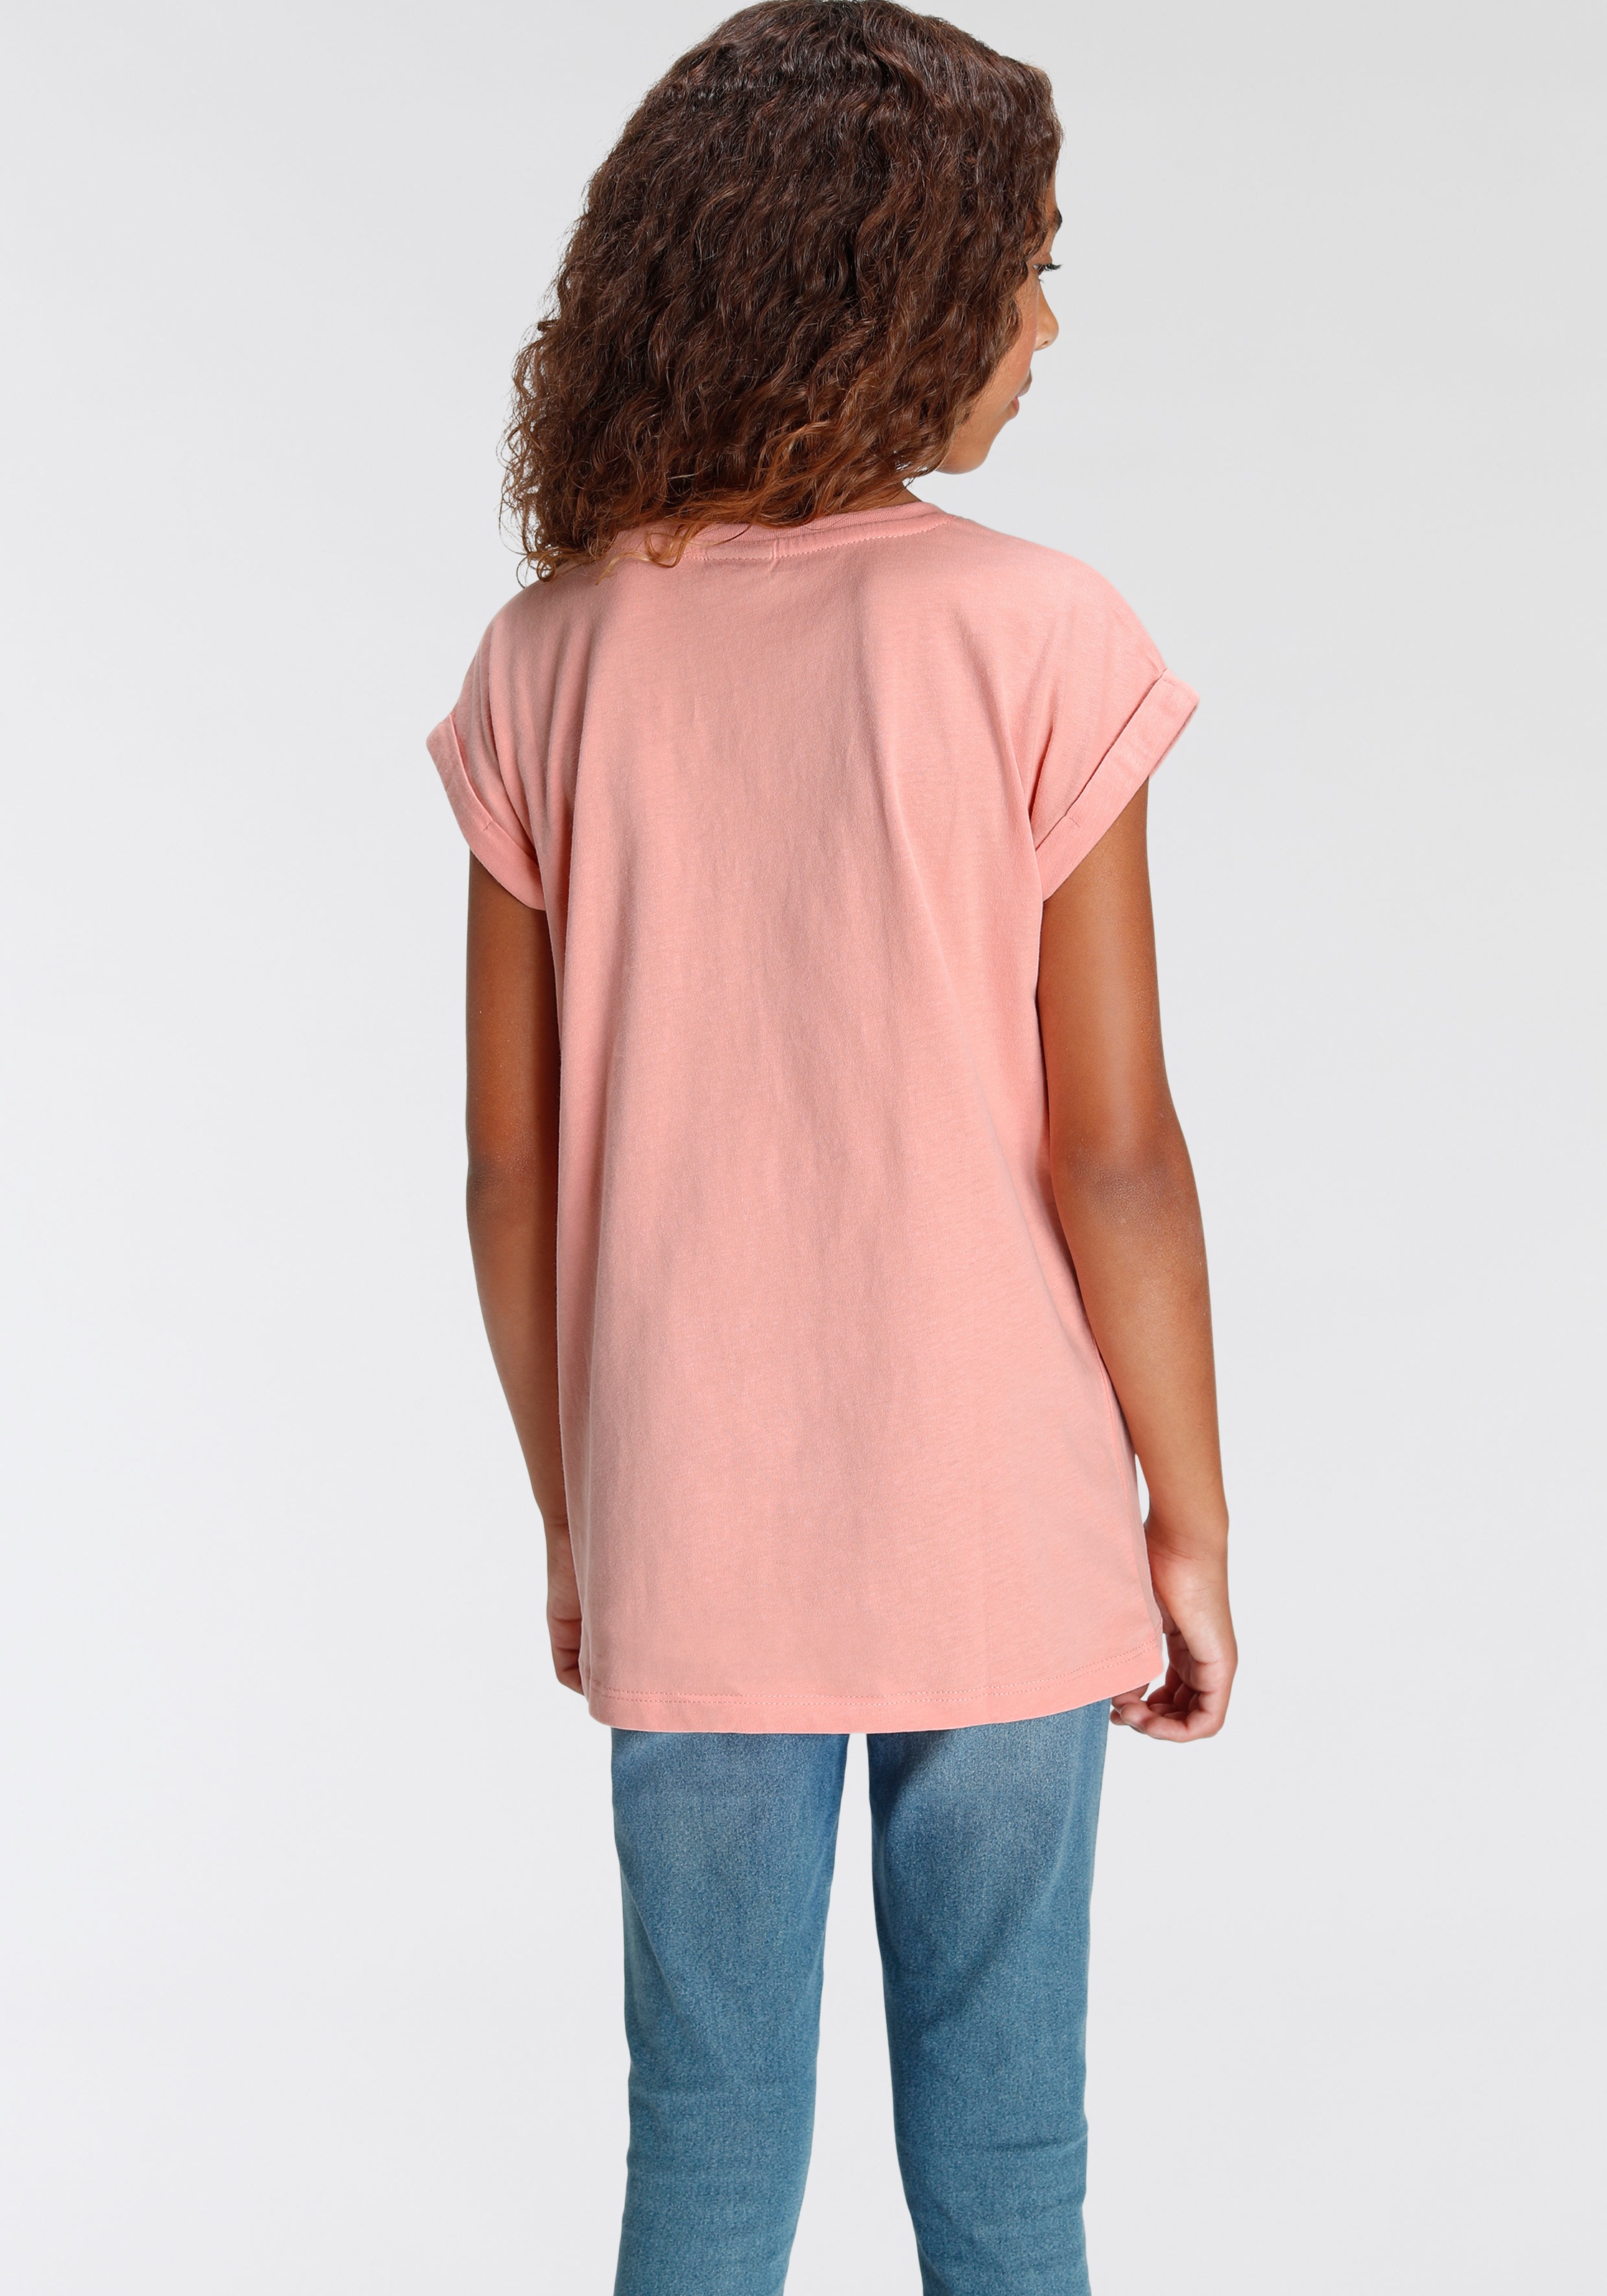 KIDSWORLD T-Shirt »Be fabulous«, in weiter legerer Form kaufen bei OTTO